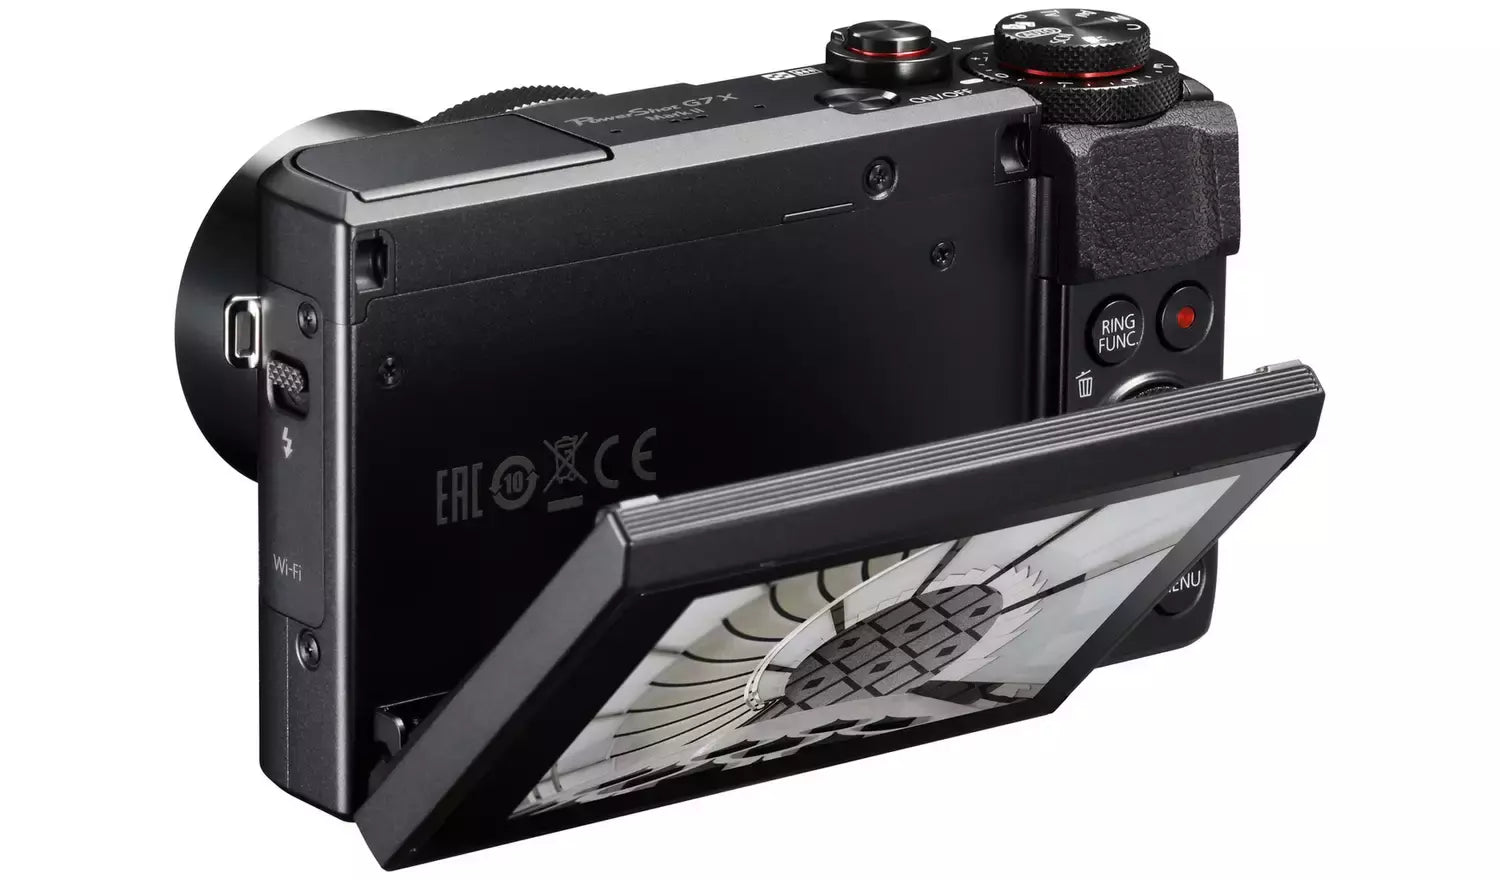 NEW Canon PowerShot G7x Mark II 20.1MP Digital Camera Body "Mini vlogger kit"